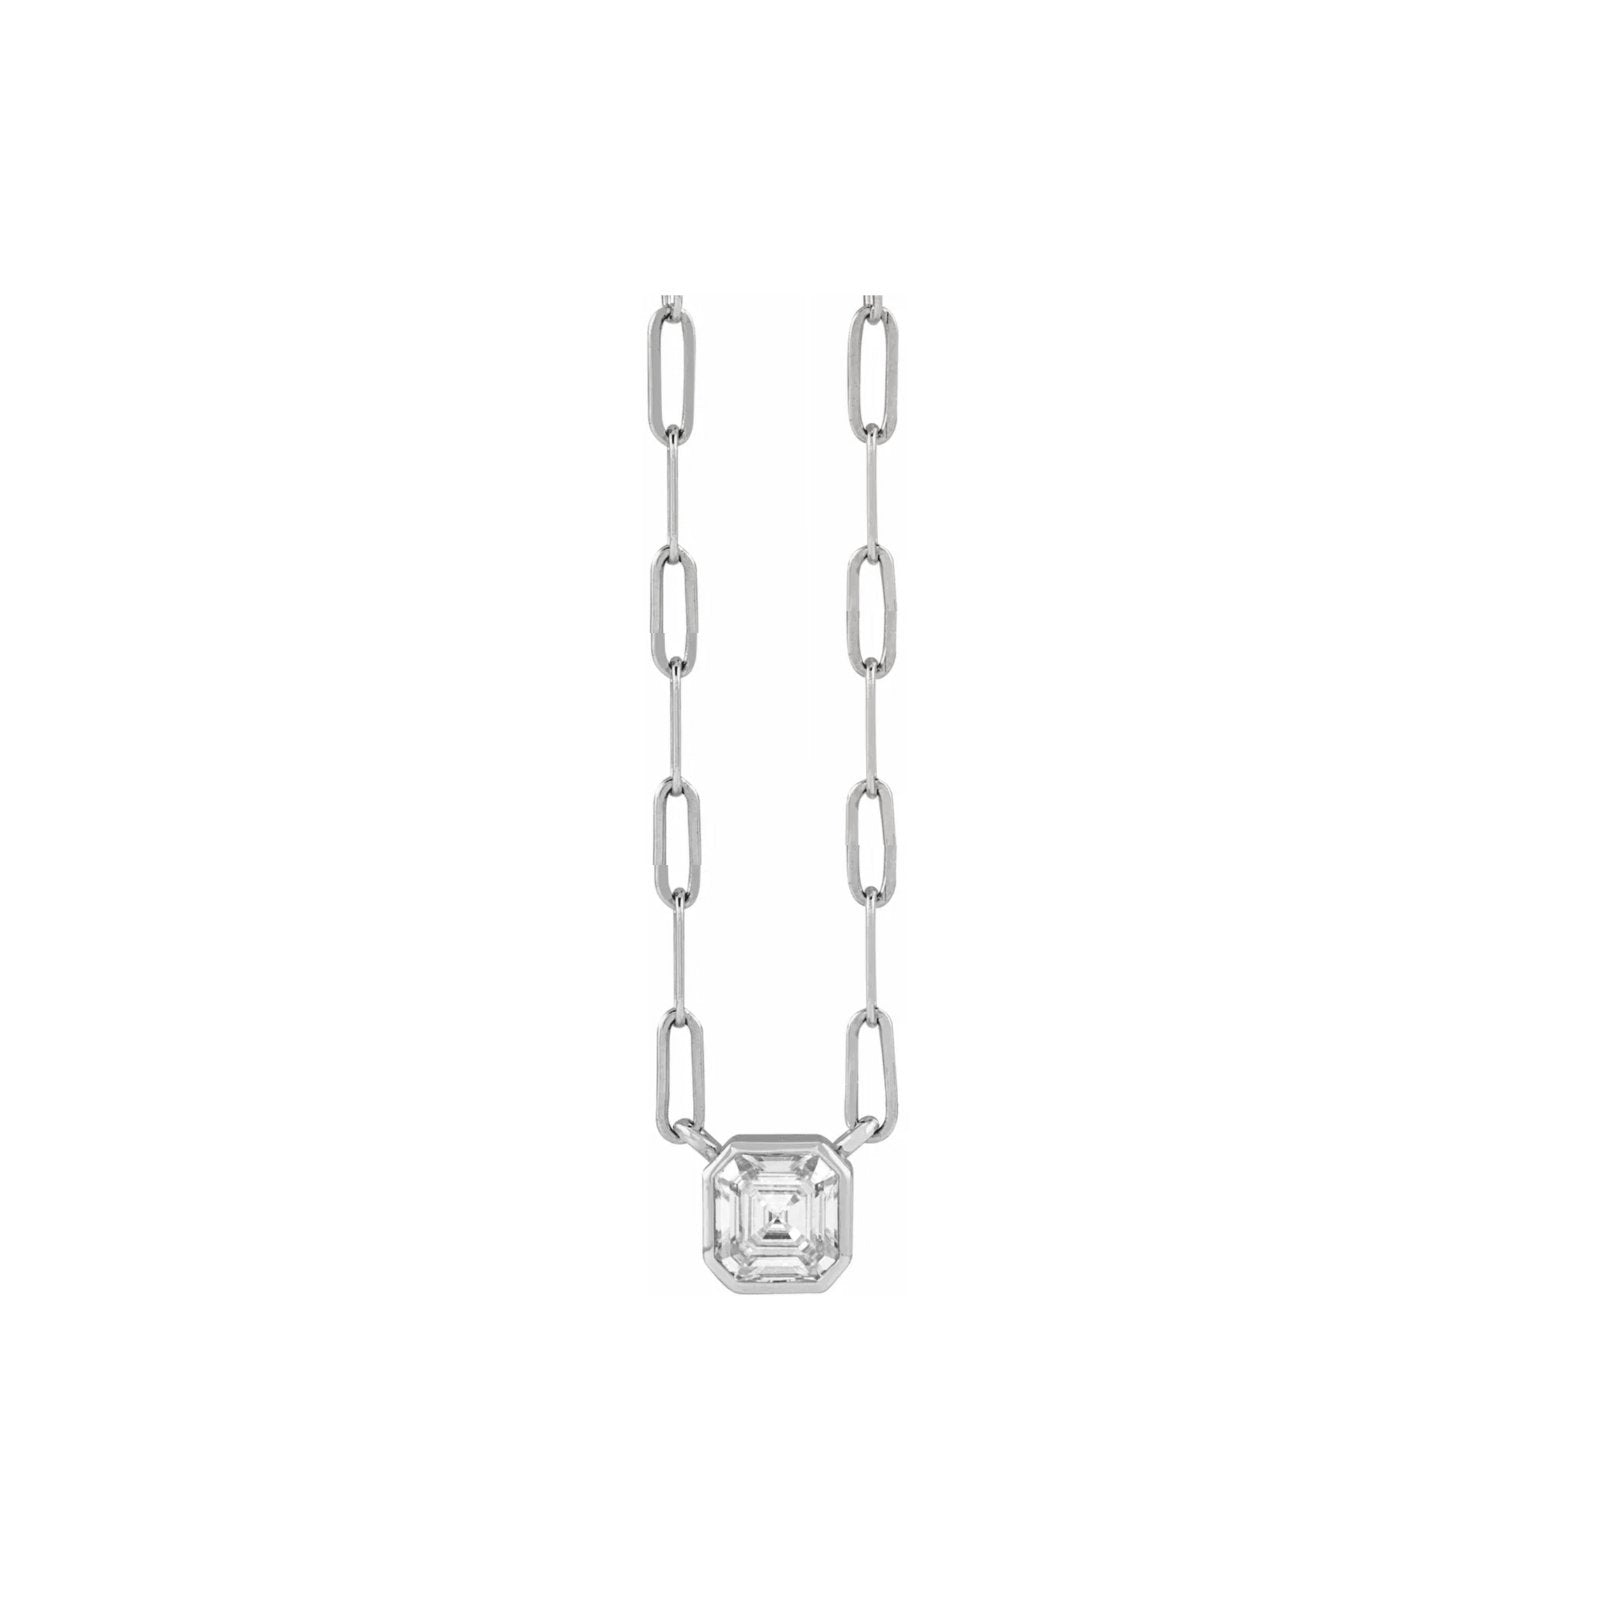 Asscher Cut Moissanite Necklace - Camille Jewelry